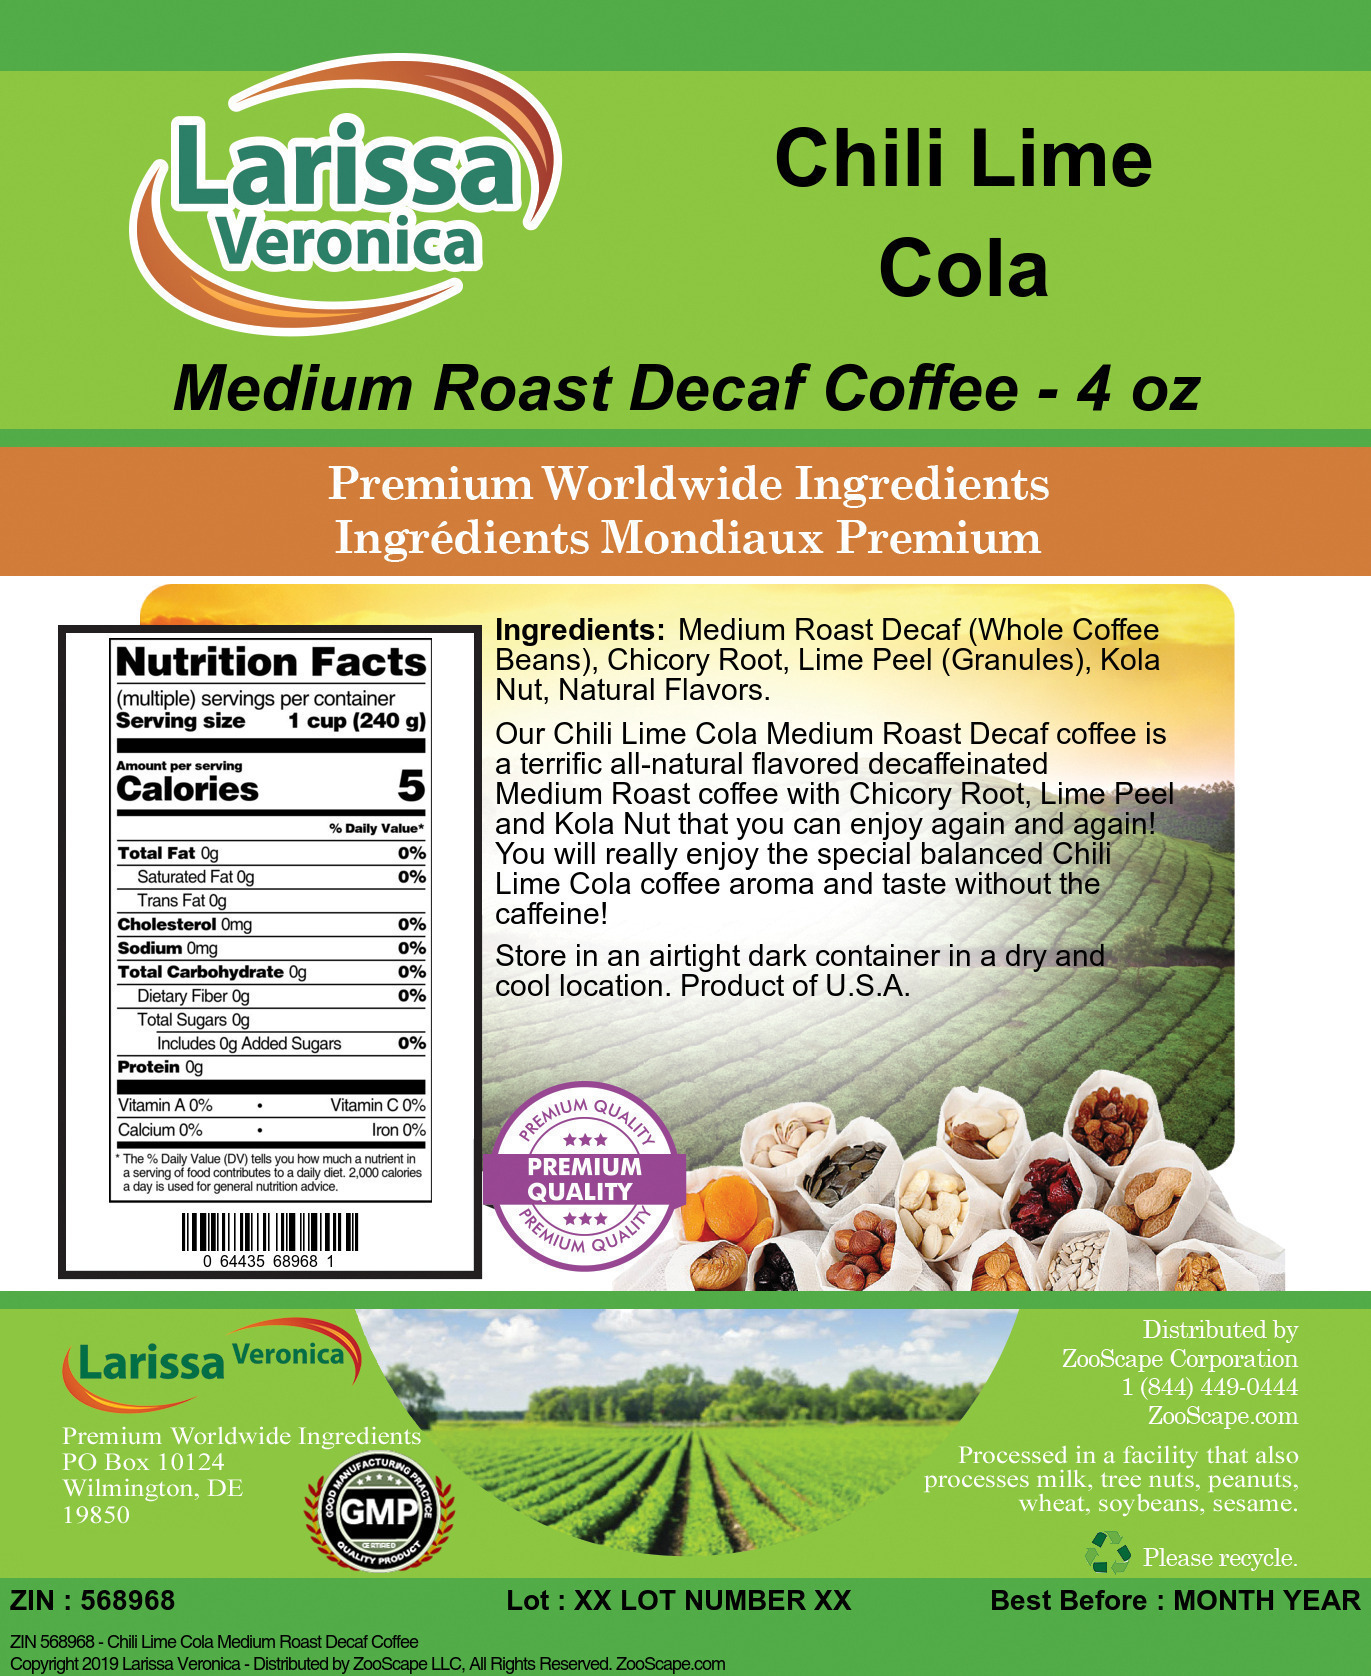 Chili Lime Cola Medium Roast Decaf Coffee - Label